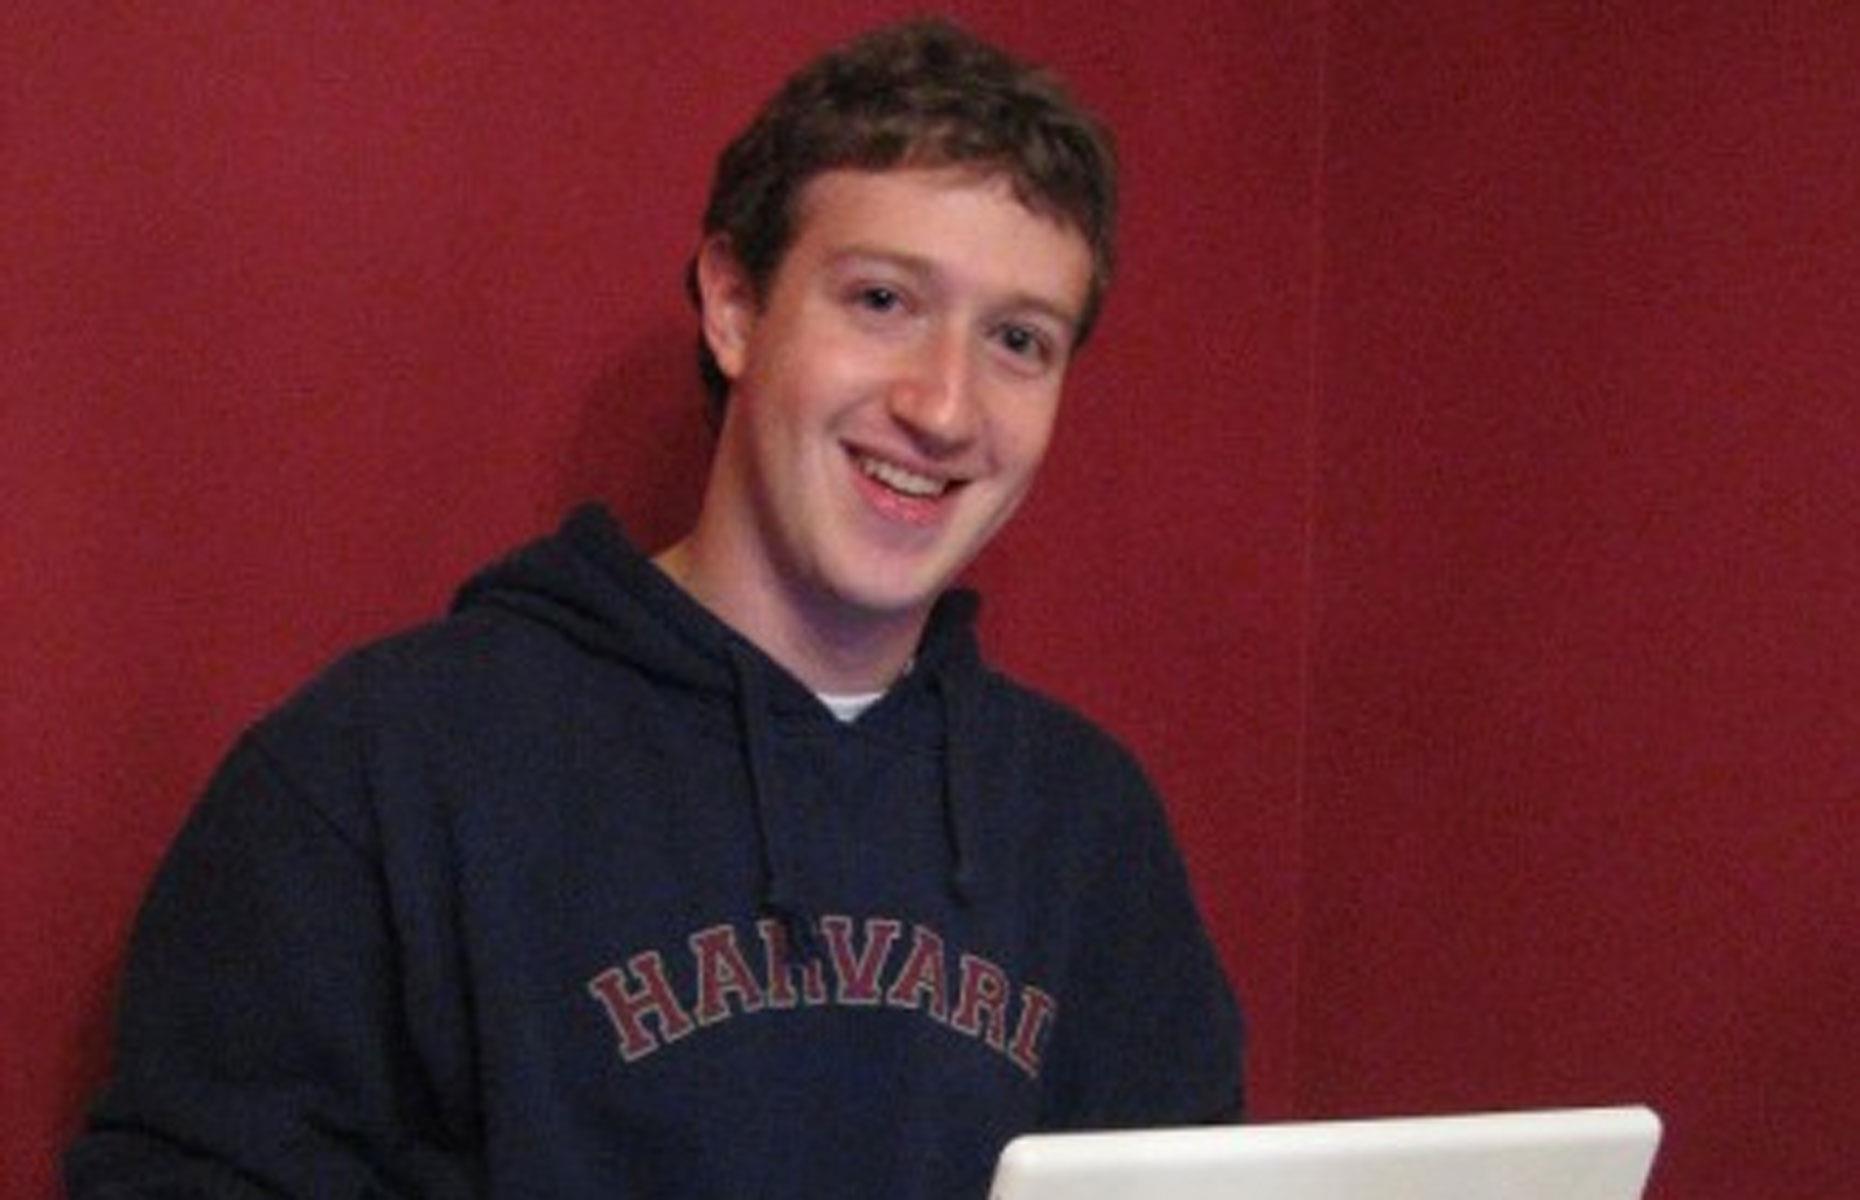 Zuckerberg put forward